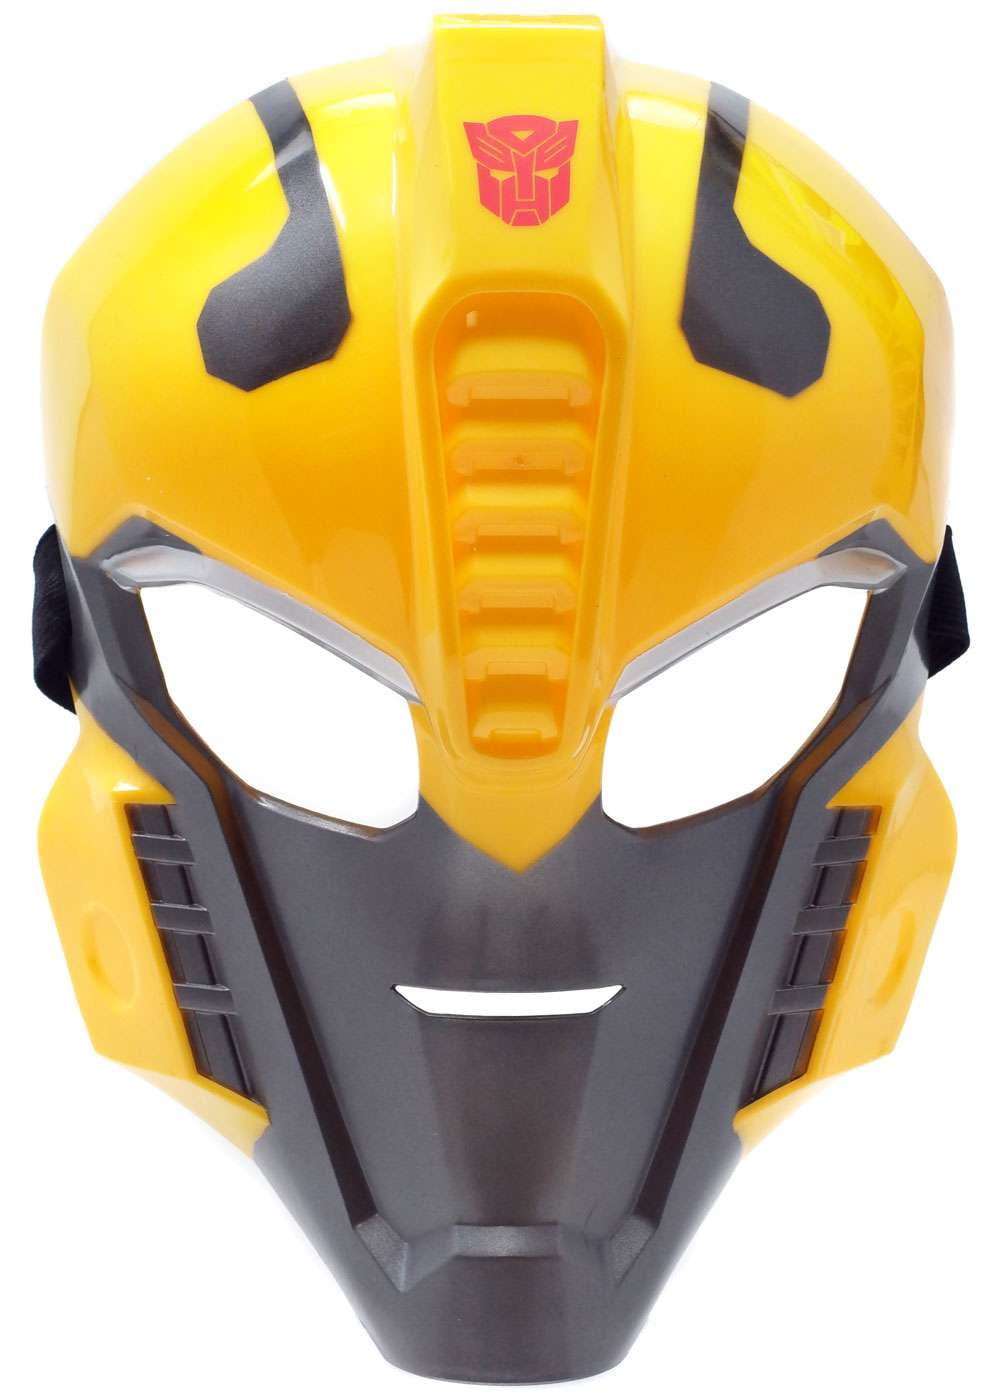 Transformers Mask - Walmart.com